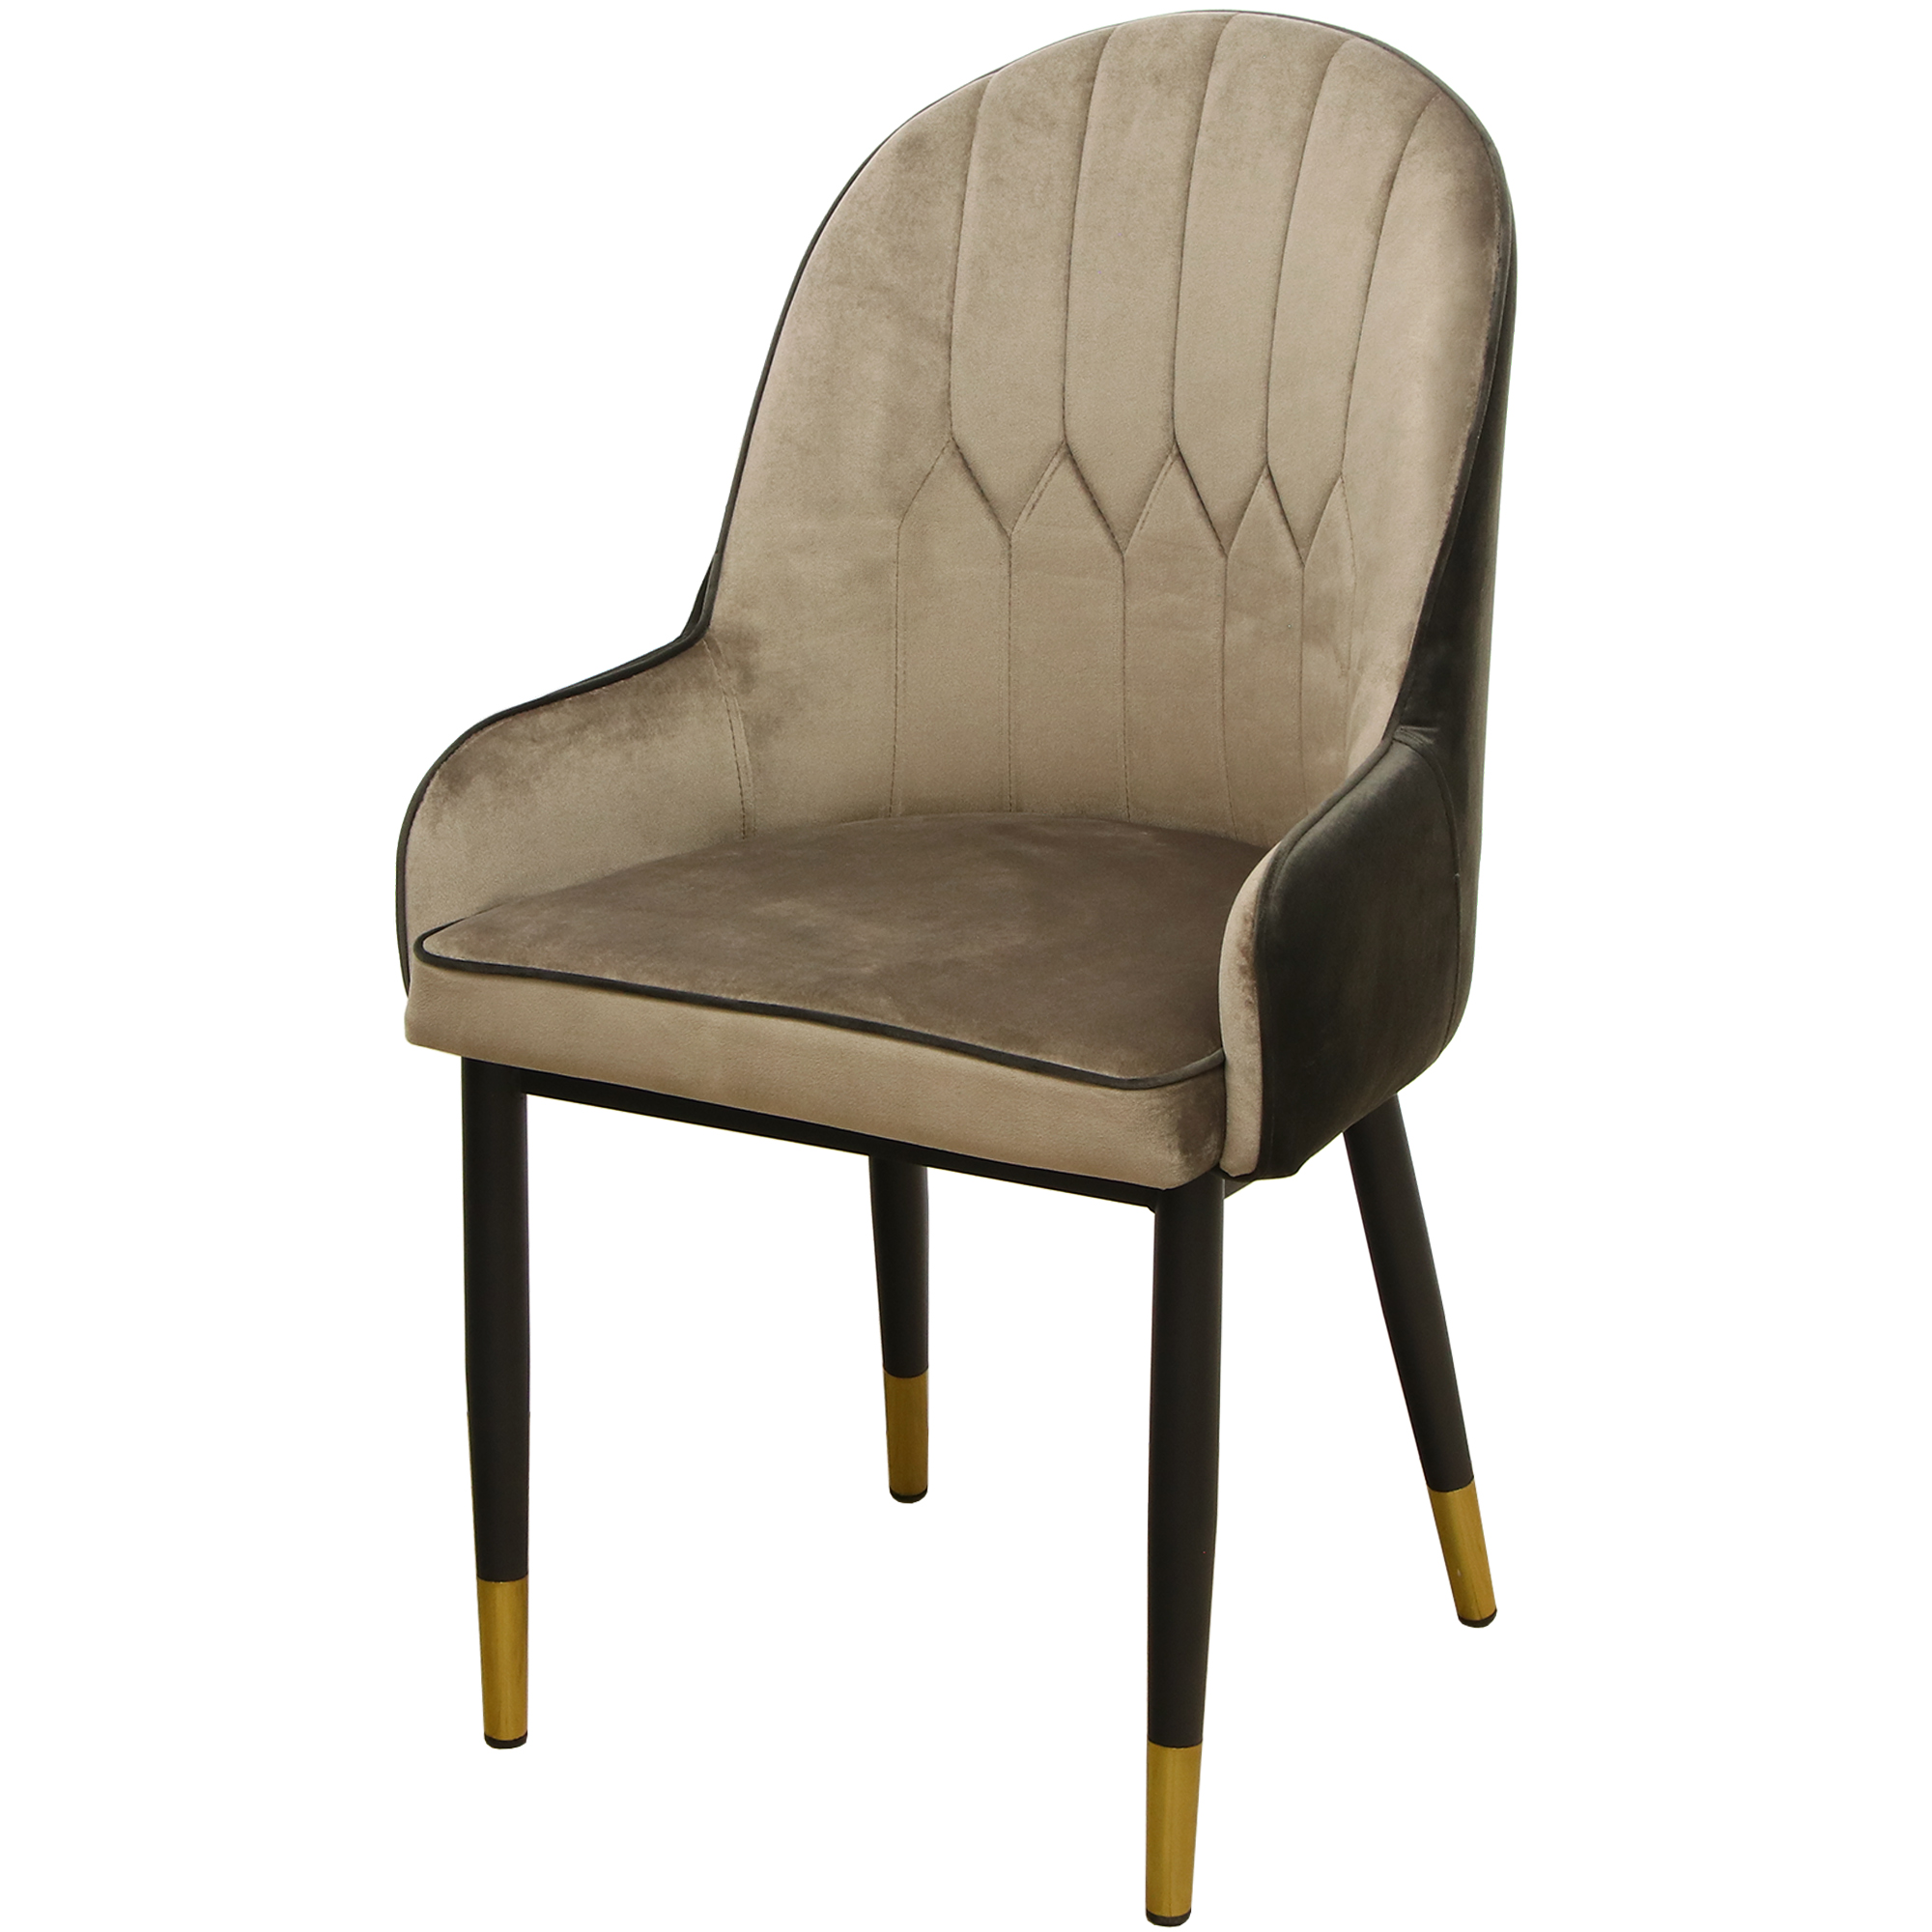 Кресло Dowell чёрное 50х53х89 см, цвет золотистый - фото 1